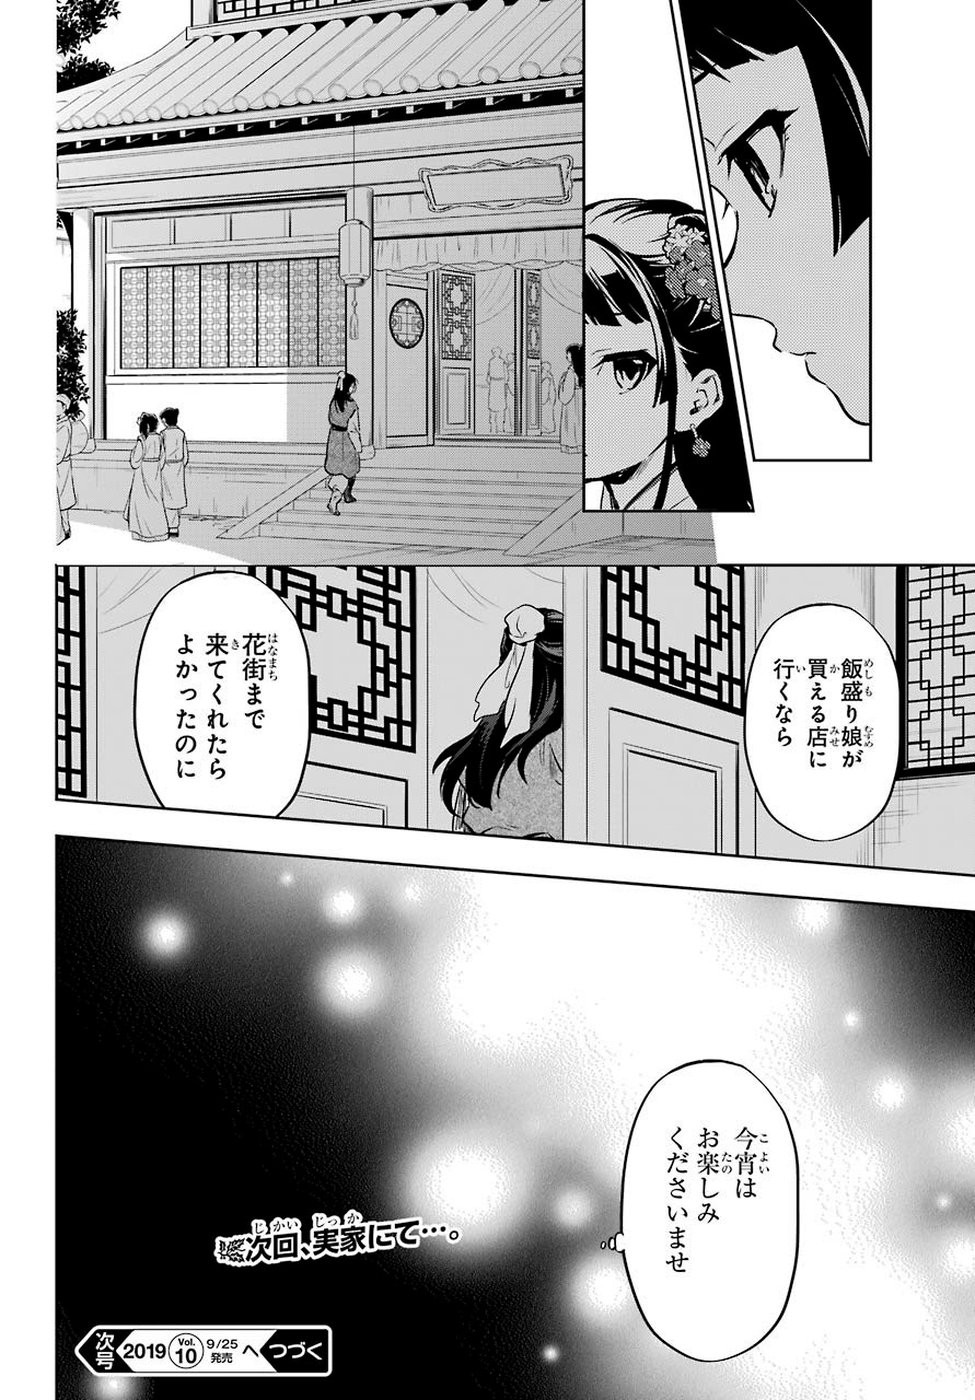 Kusuriya no Hitorigoto - Chapter 28-1 - Page 18